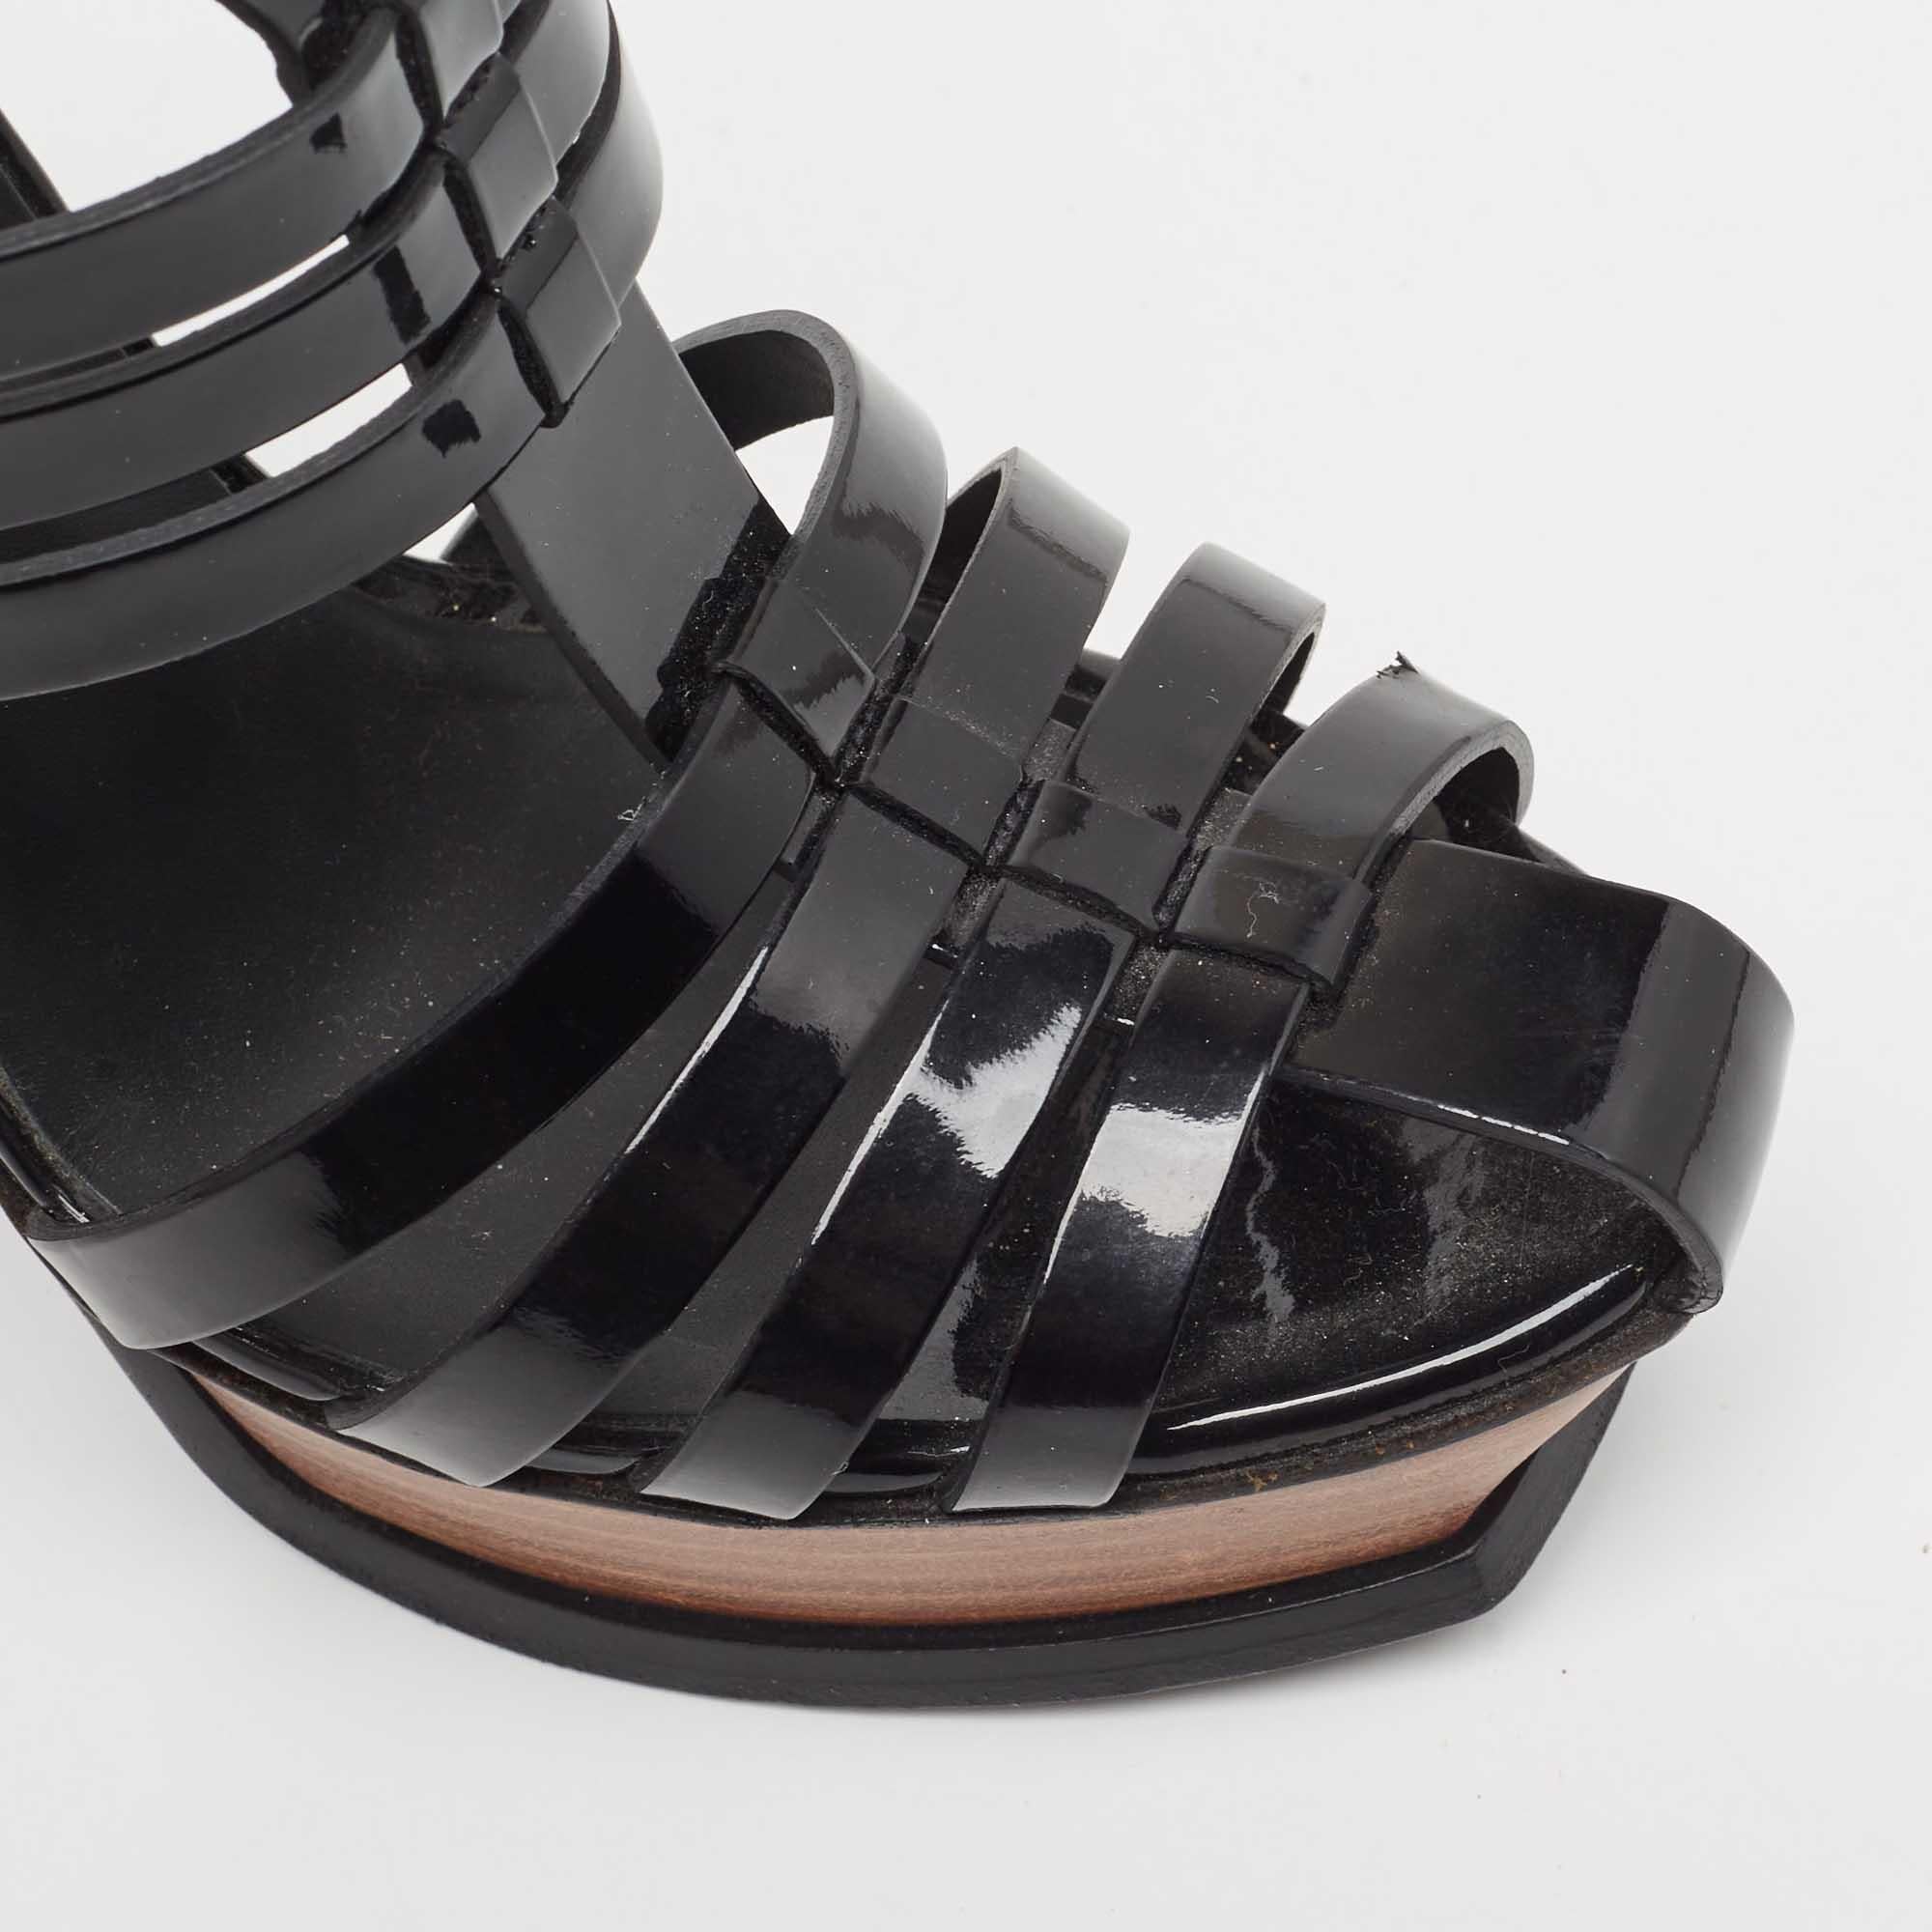 Yves Saint Laurent Black Patent Tribute Ankle Strap Sandals Size 39 For Sale 1